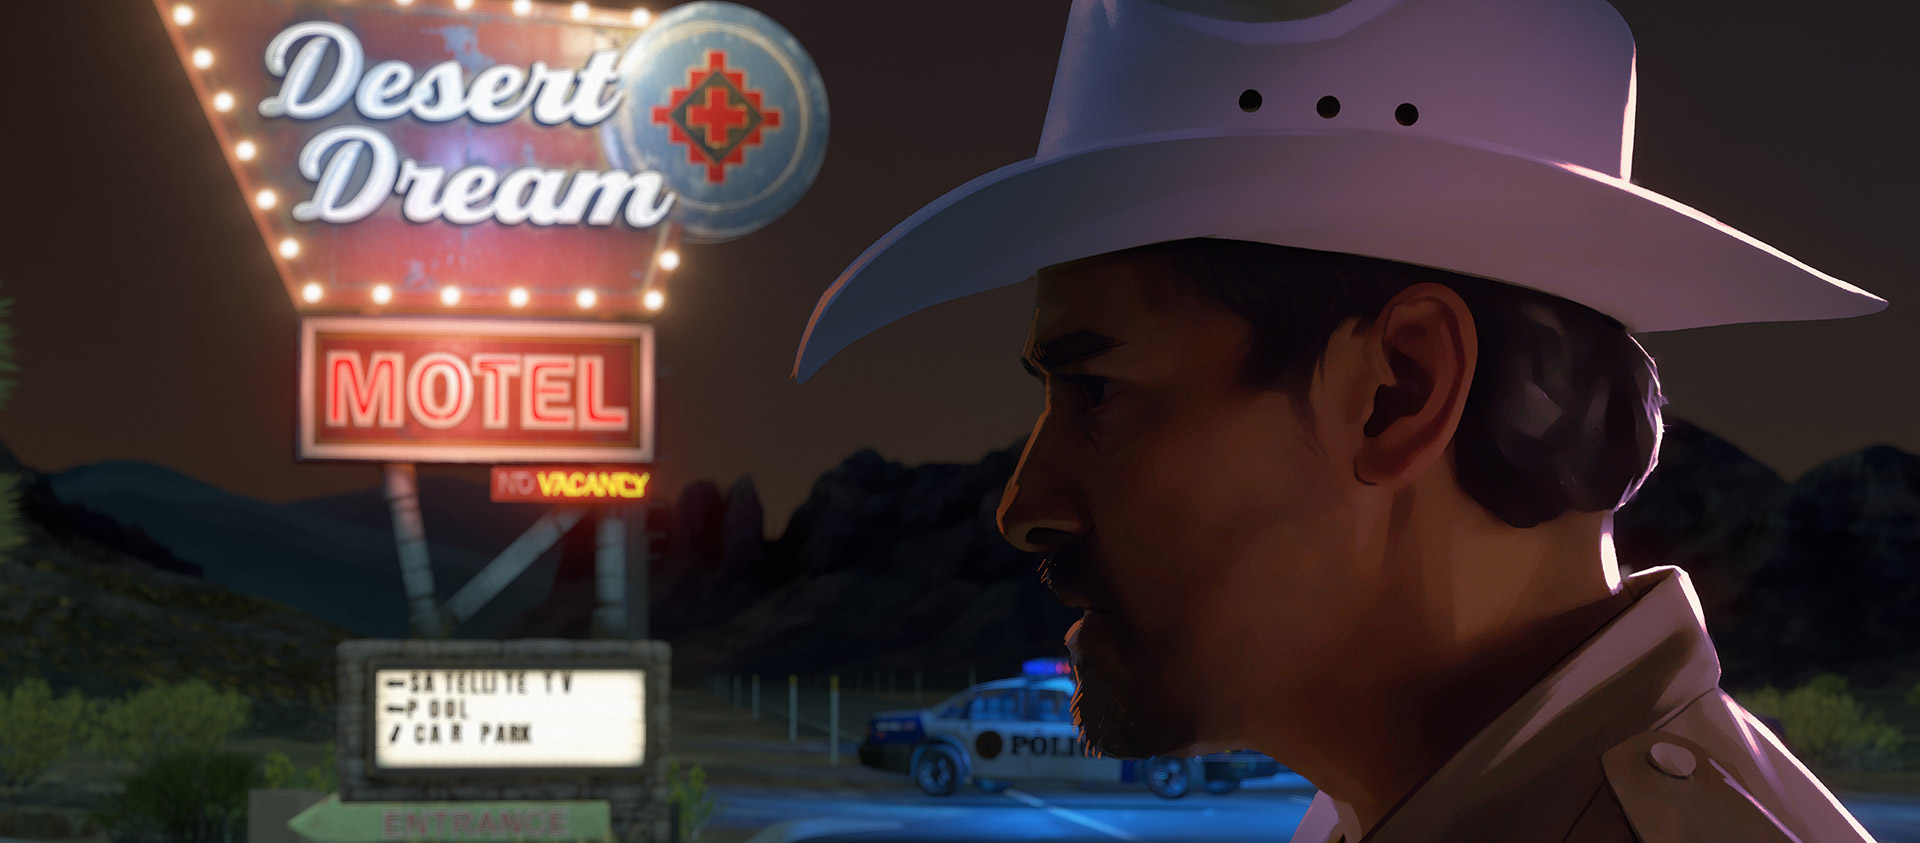 En betjent med cowboyhat står under et neonbelyst motelskilt.